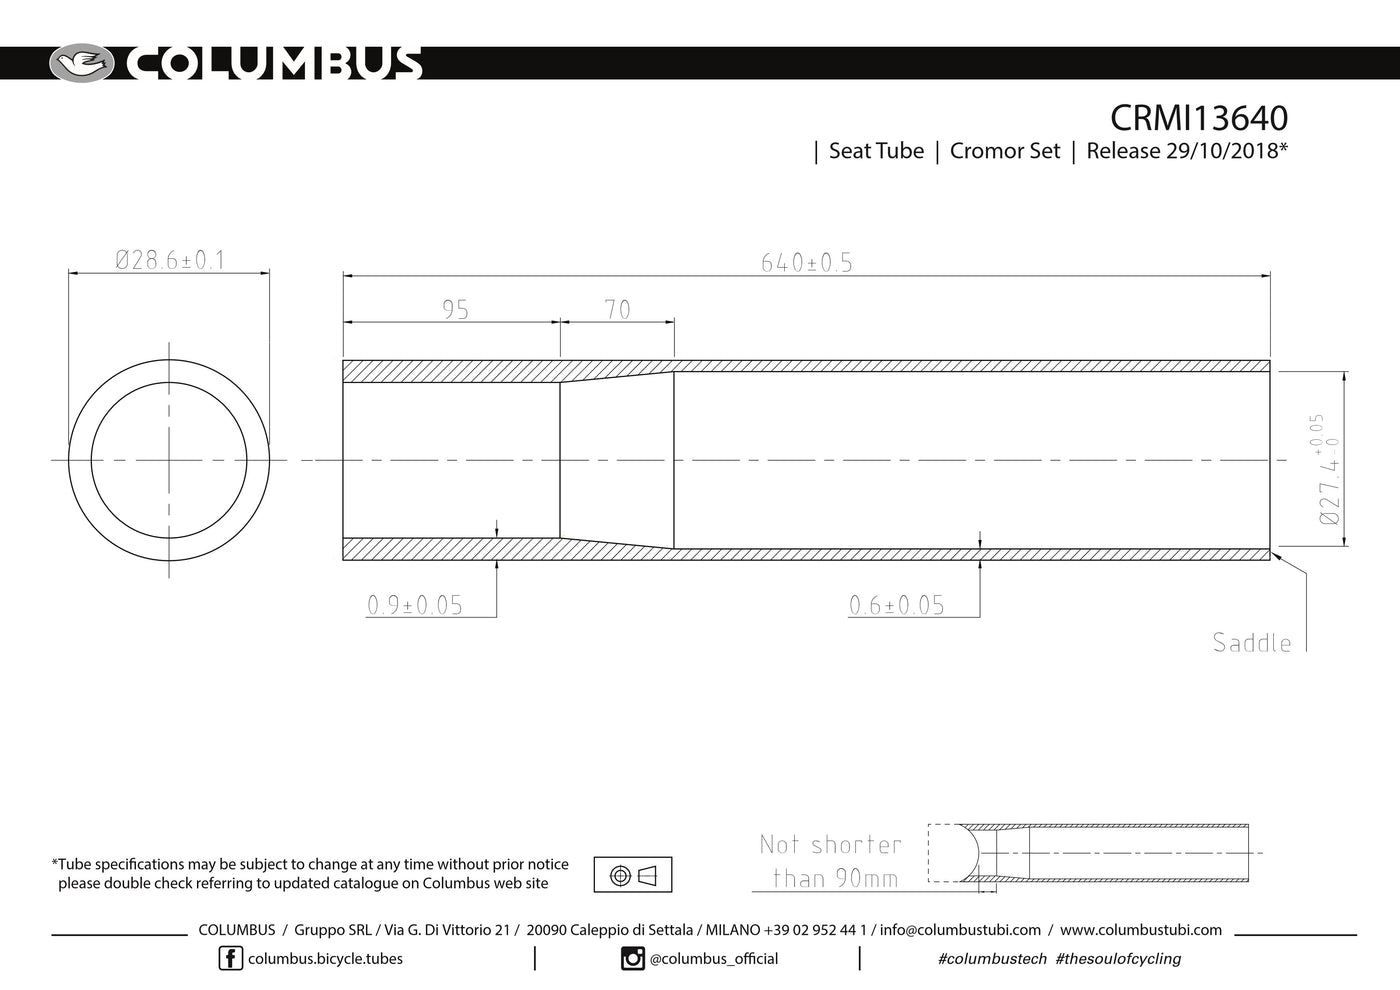 CRMI13640  Columbus Tubing Cromor single butted seat tube - 28.6 dia. - .9/.6 - length = 640